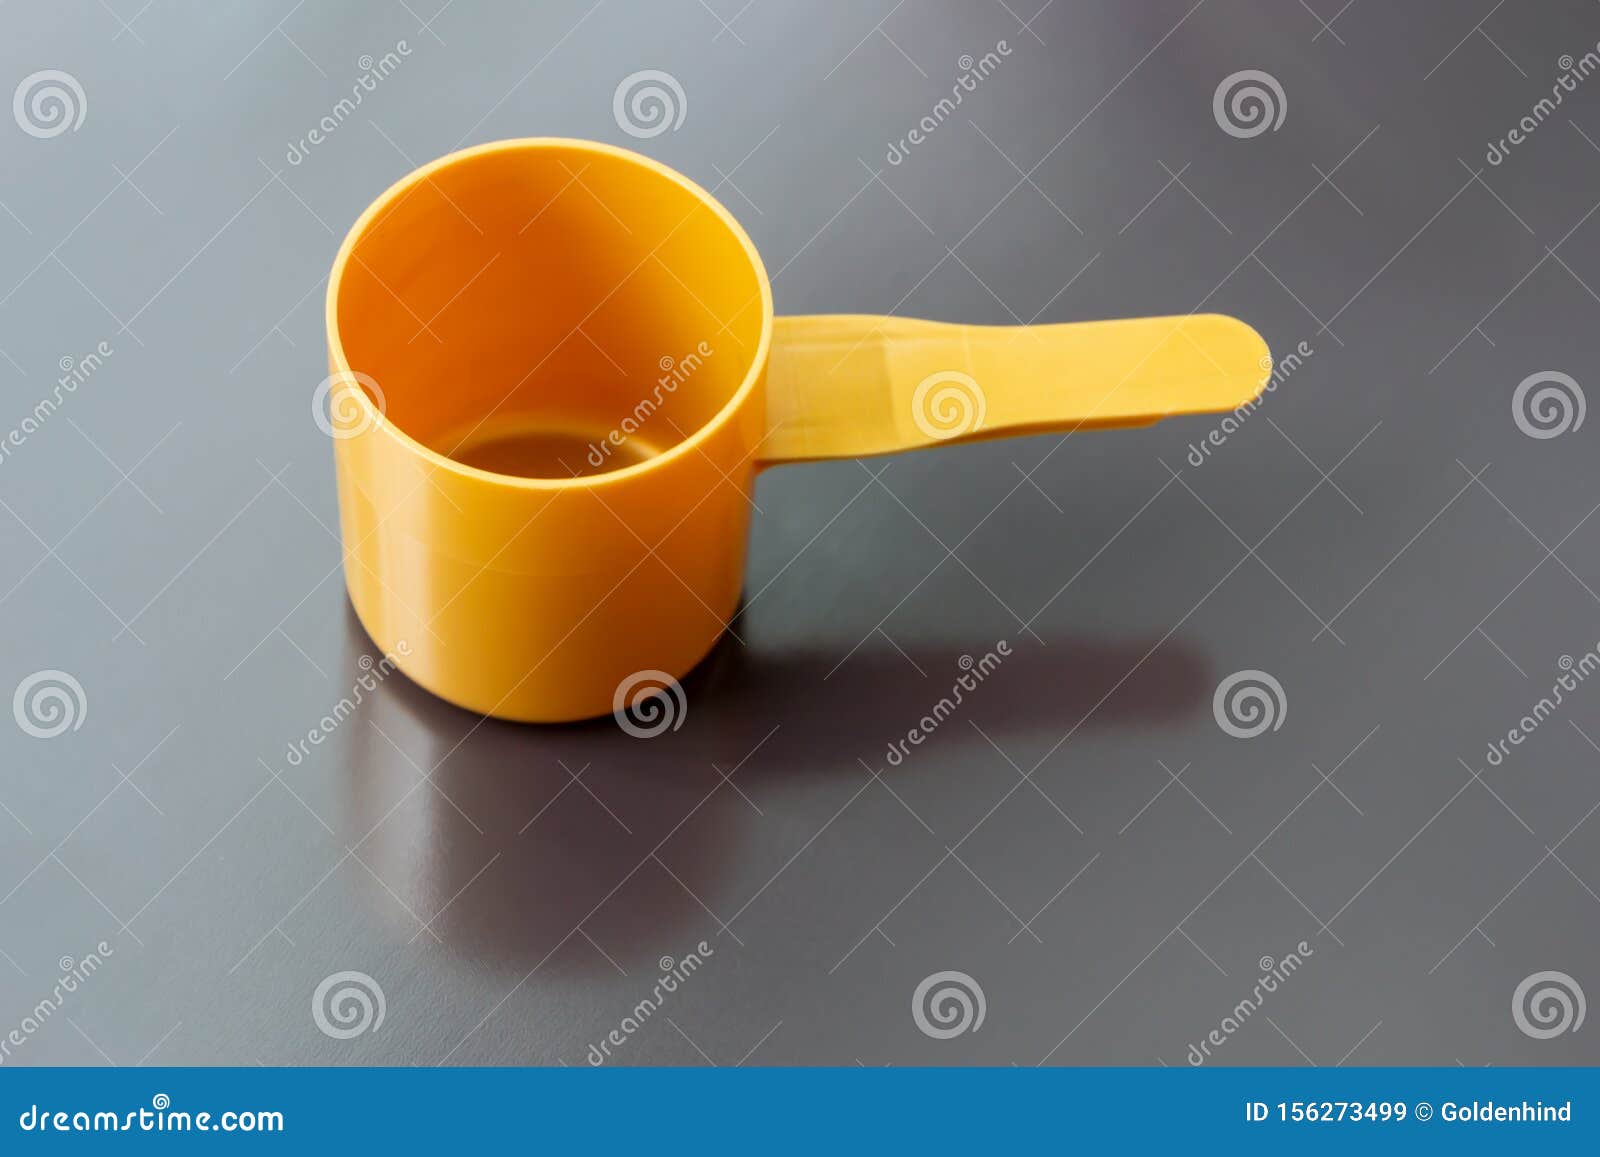 orange plastic measuring dosage spoon on dark background